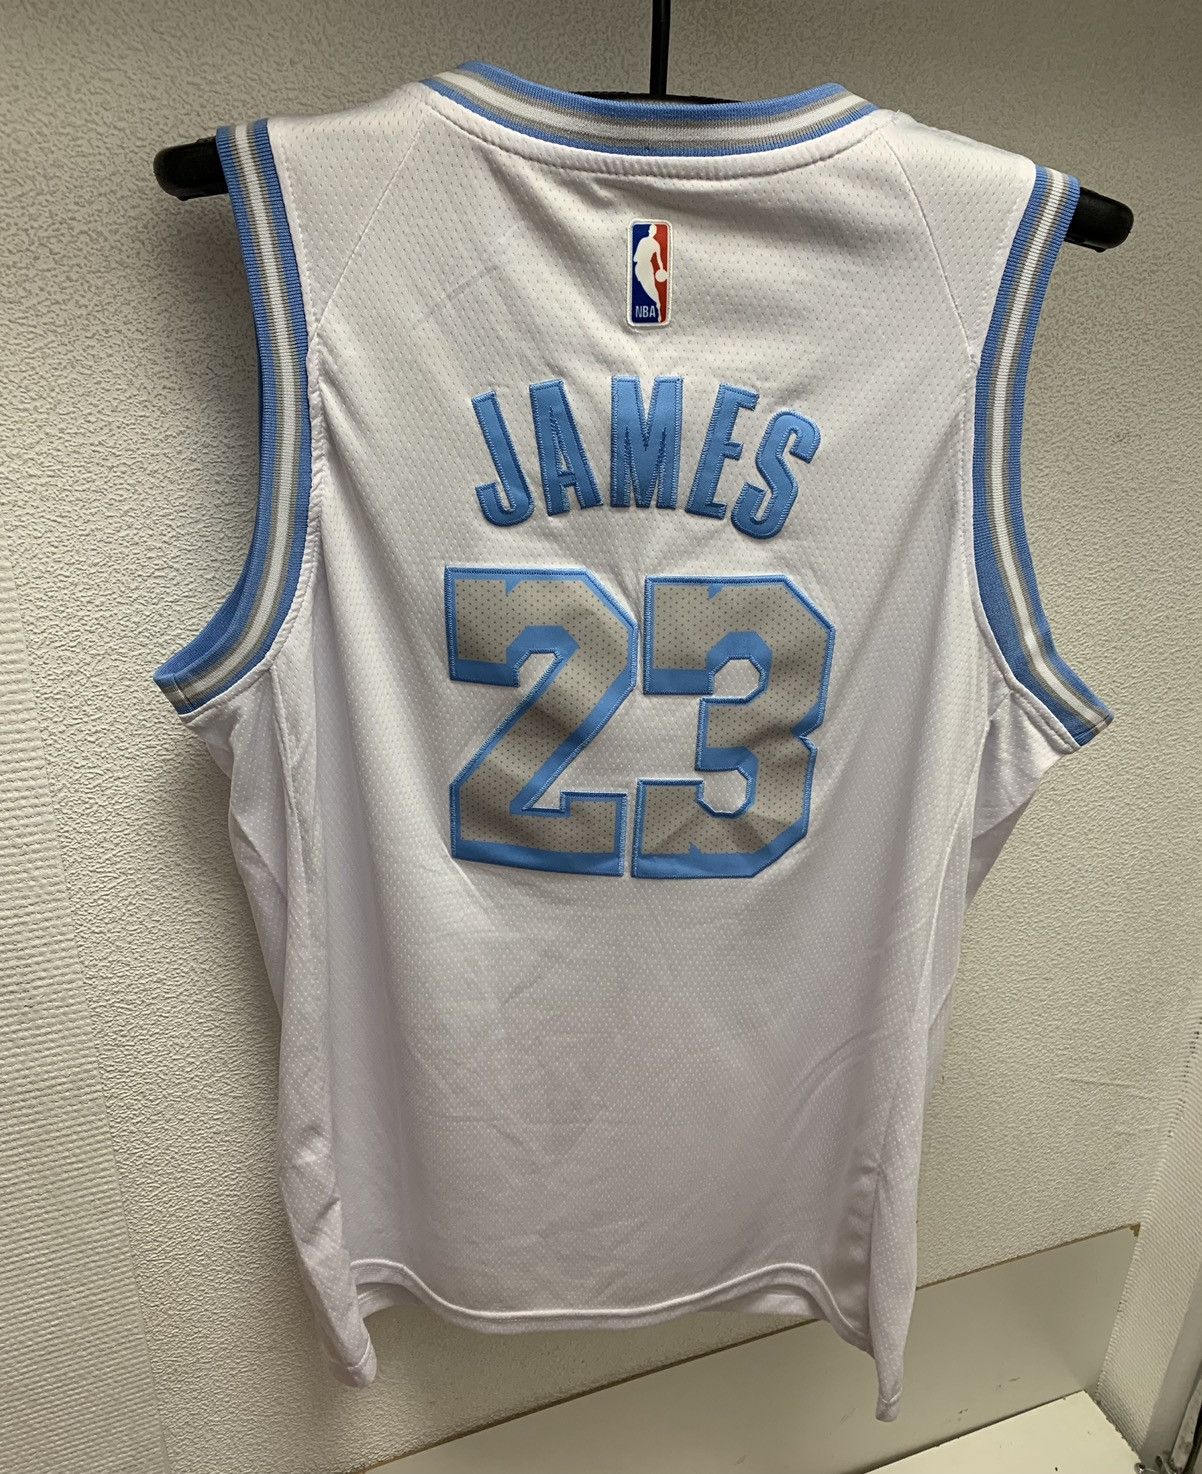 NIKE WISH LOS ANGELES LAKERS NBA BASKETBALL JERSEY LEBRON JAMES #23 SIZE 54